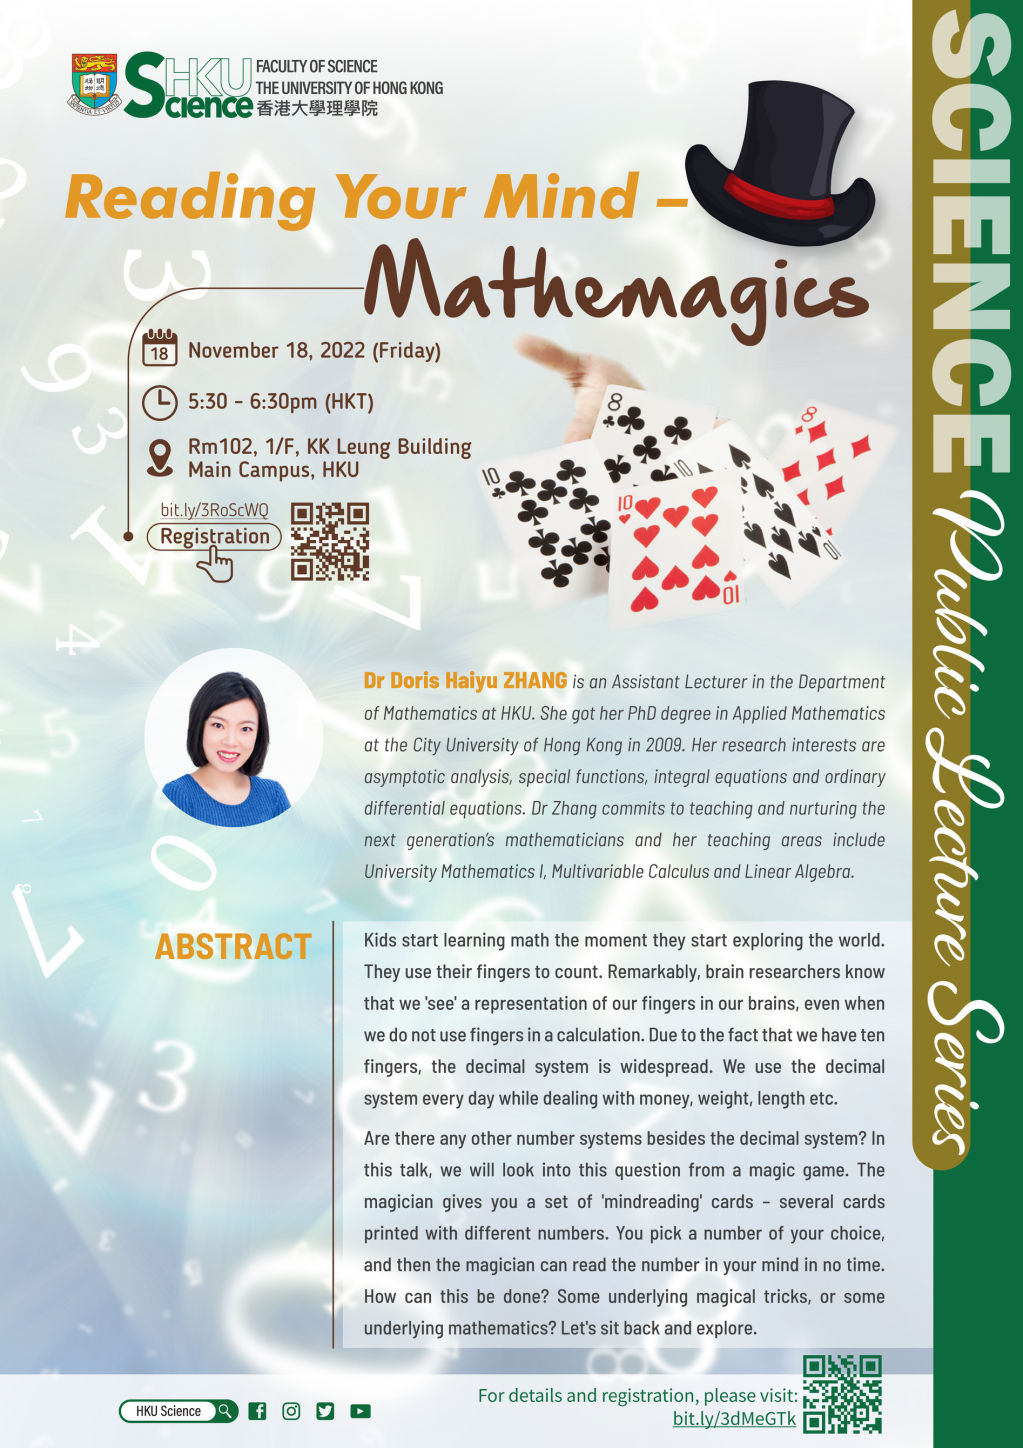 HKU Science Public Lecture Series: Reading Your Mind - Mathemagics (Nov 18, 2022)